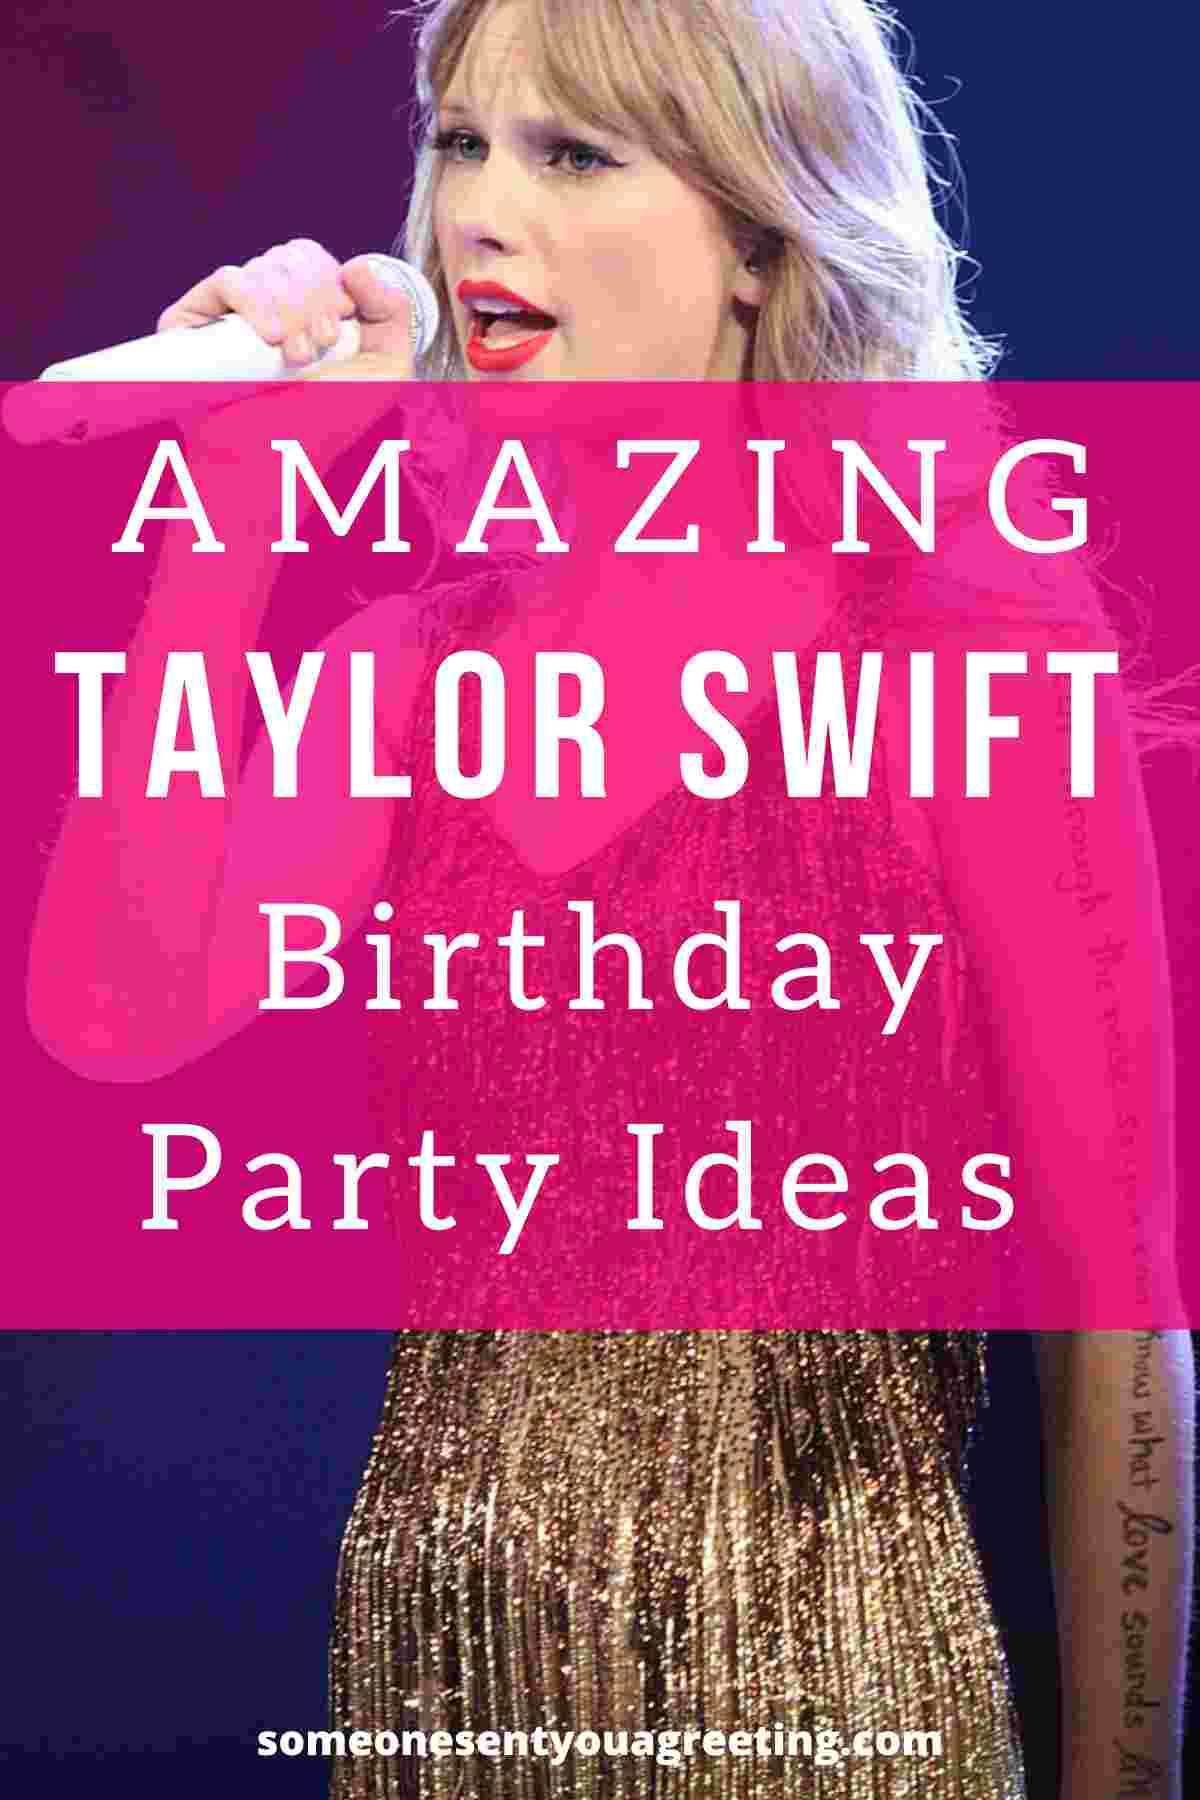 taylor swift birthday party ideas